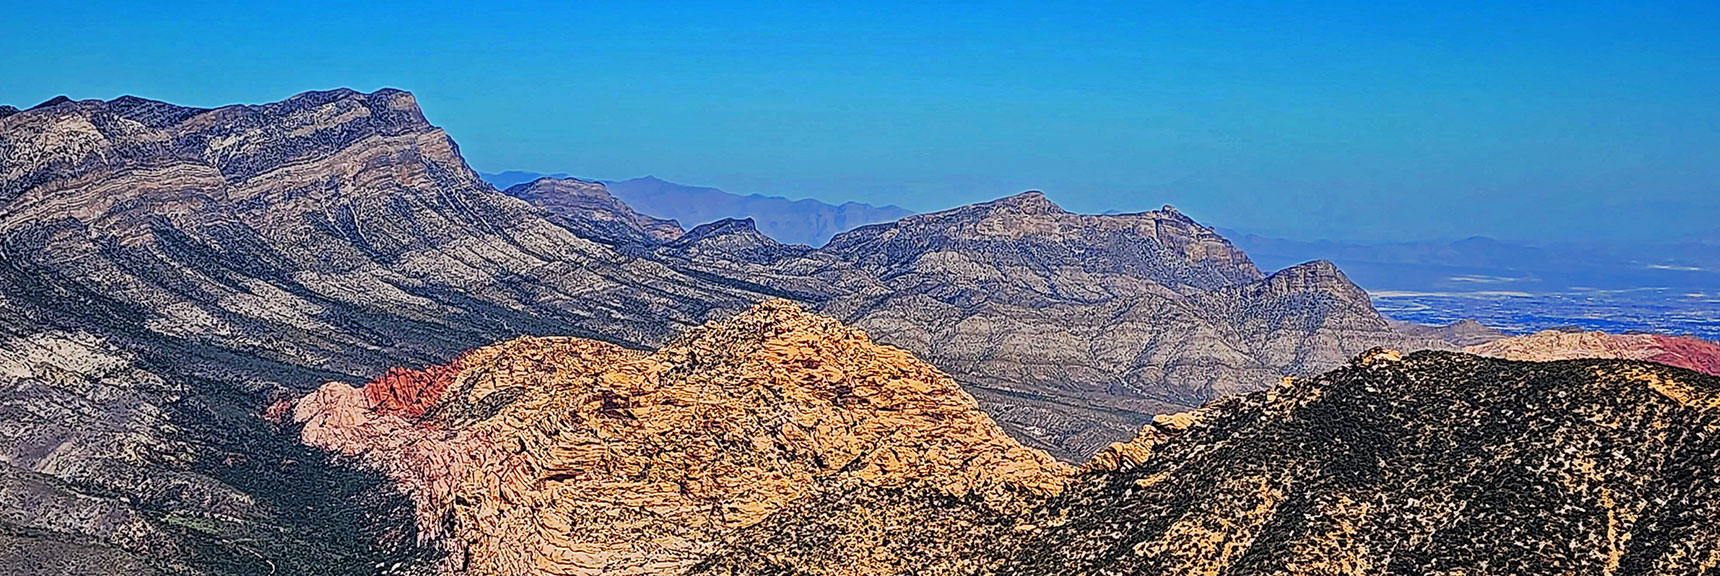 White Rock Mt., Damsel & Turtlehead Peaks, Las Vegas Valley Background | Red Rock Summit Loop | Wilson Ridge | Lovell Canyon, Nevada